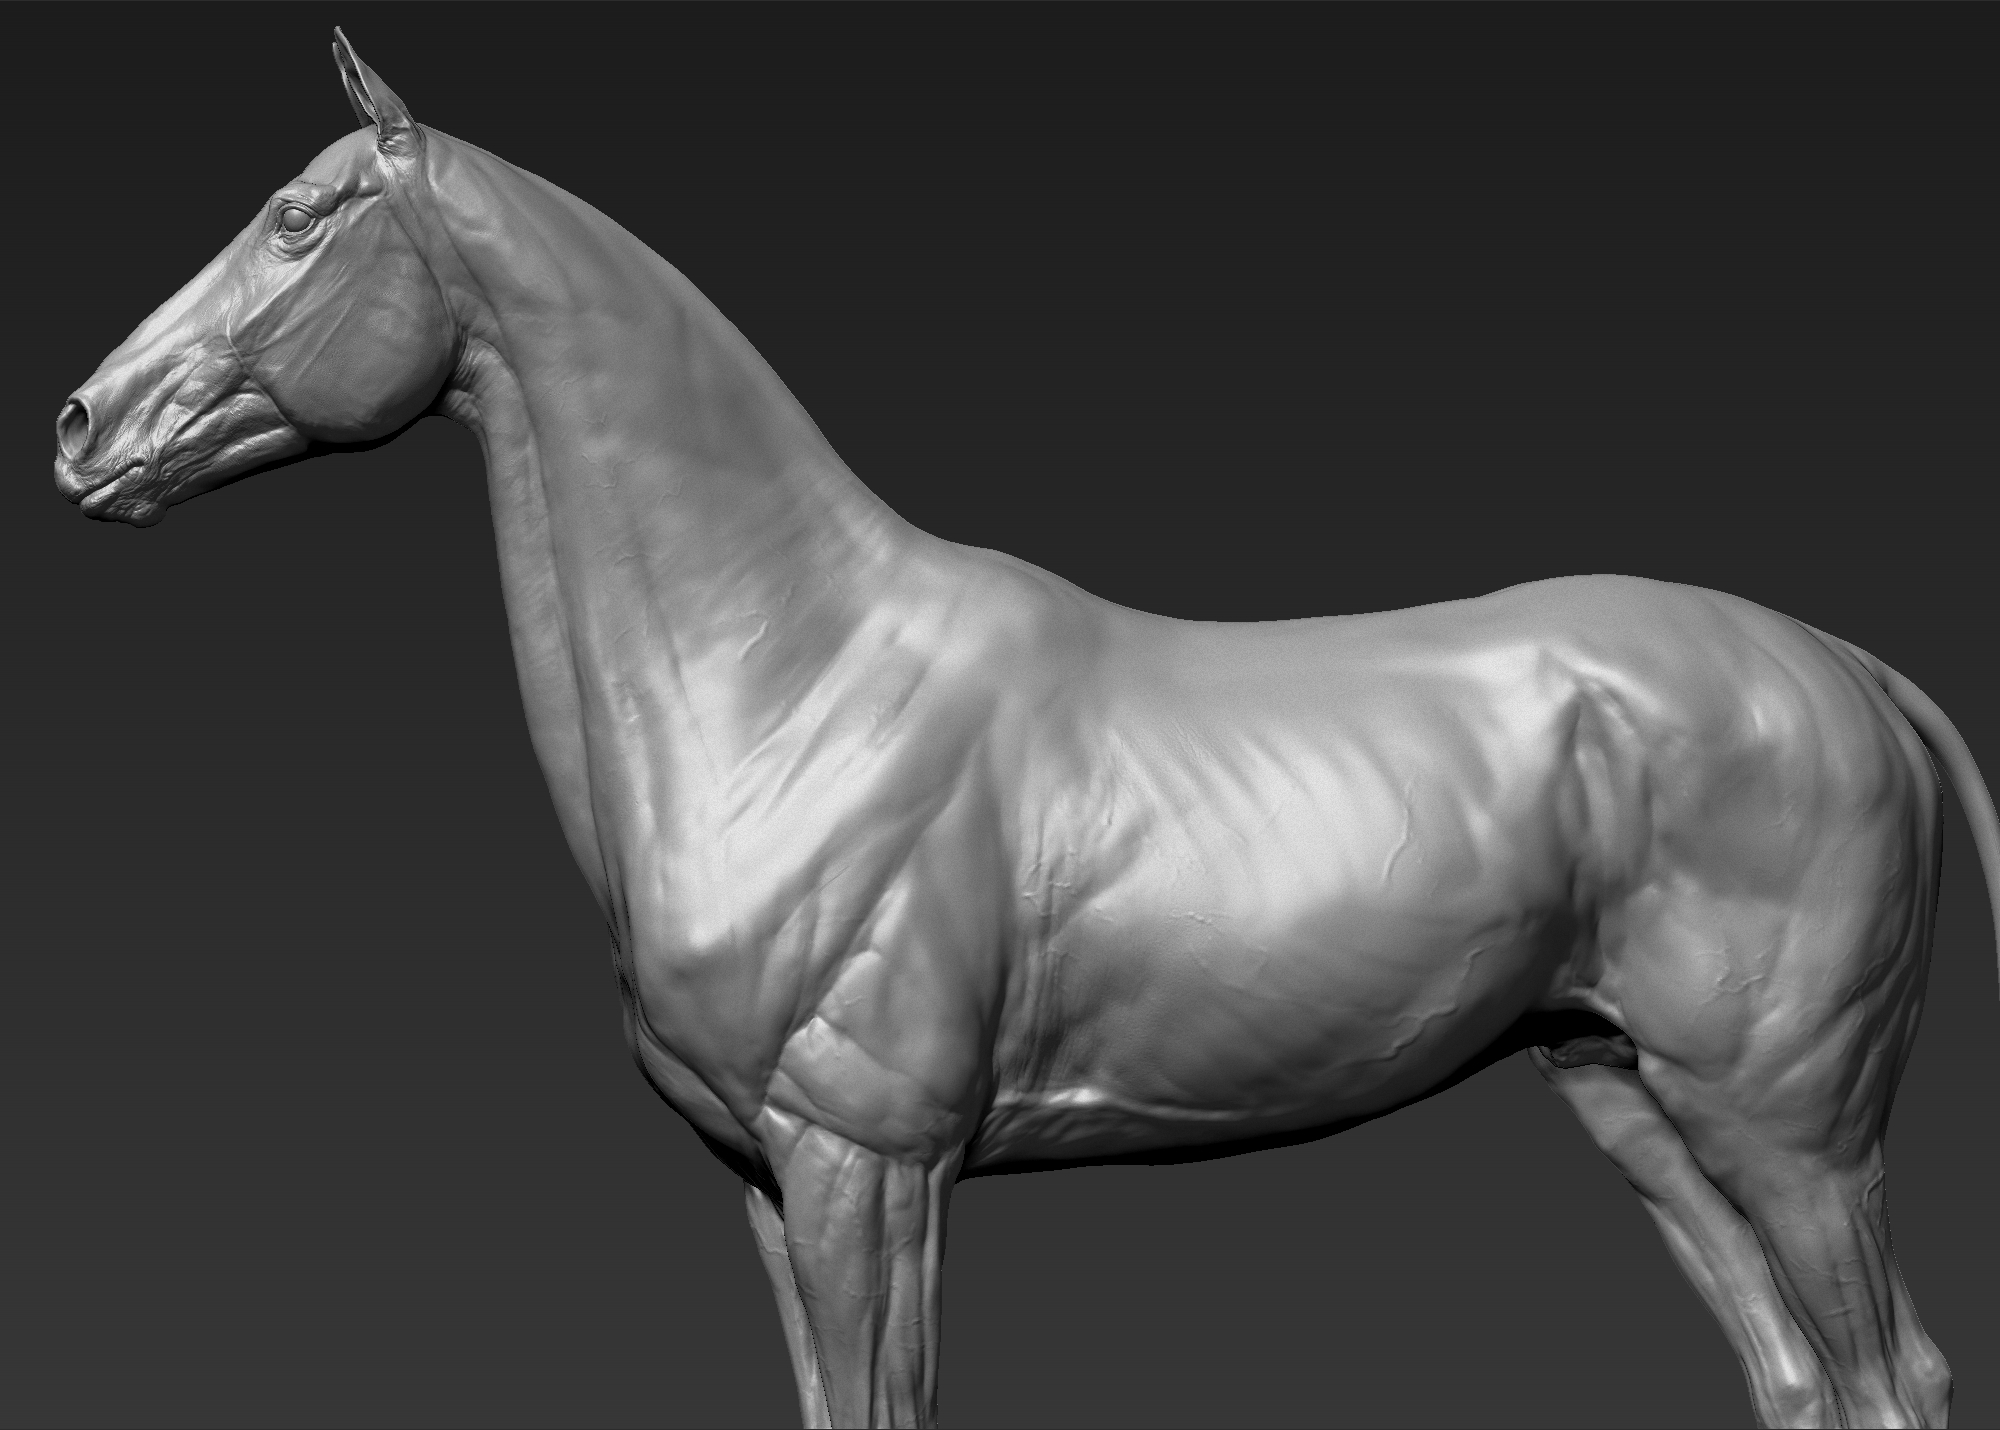 horse zbrush model download